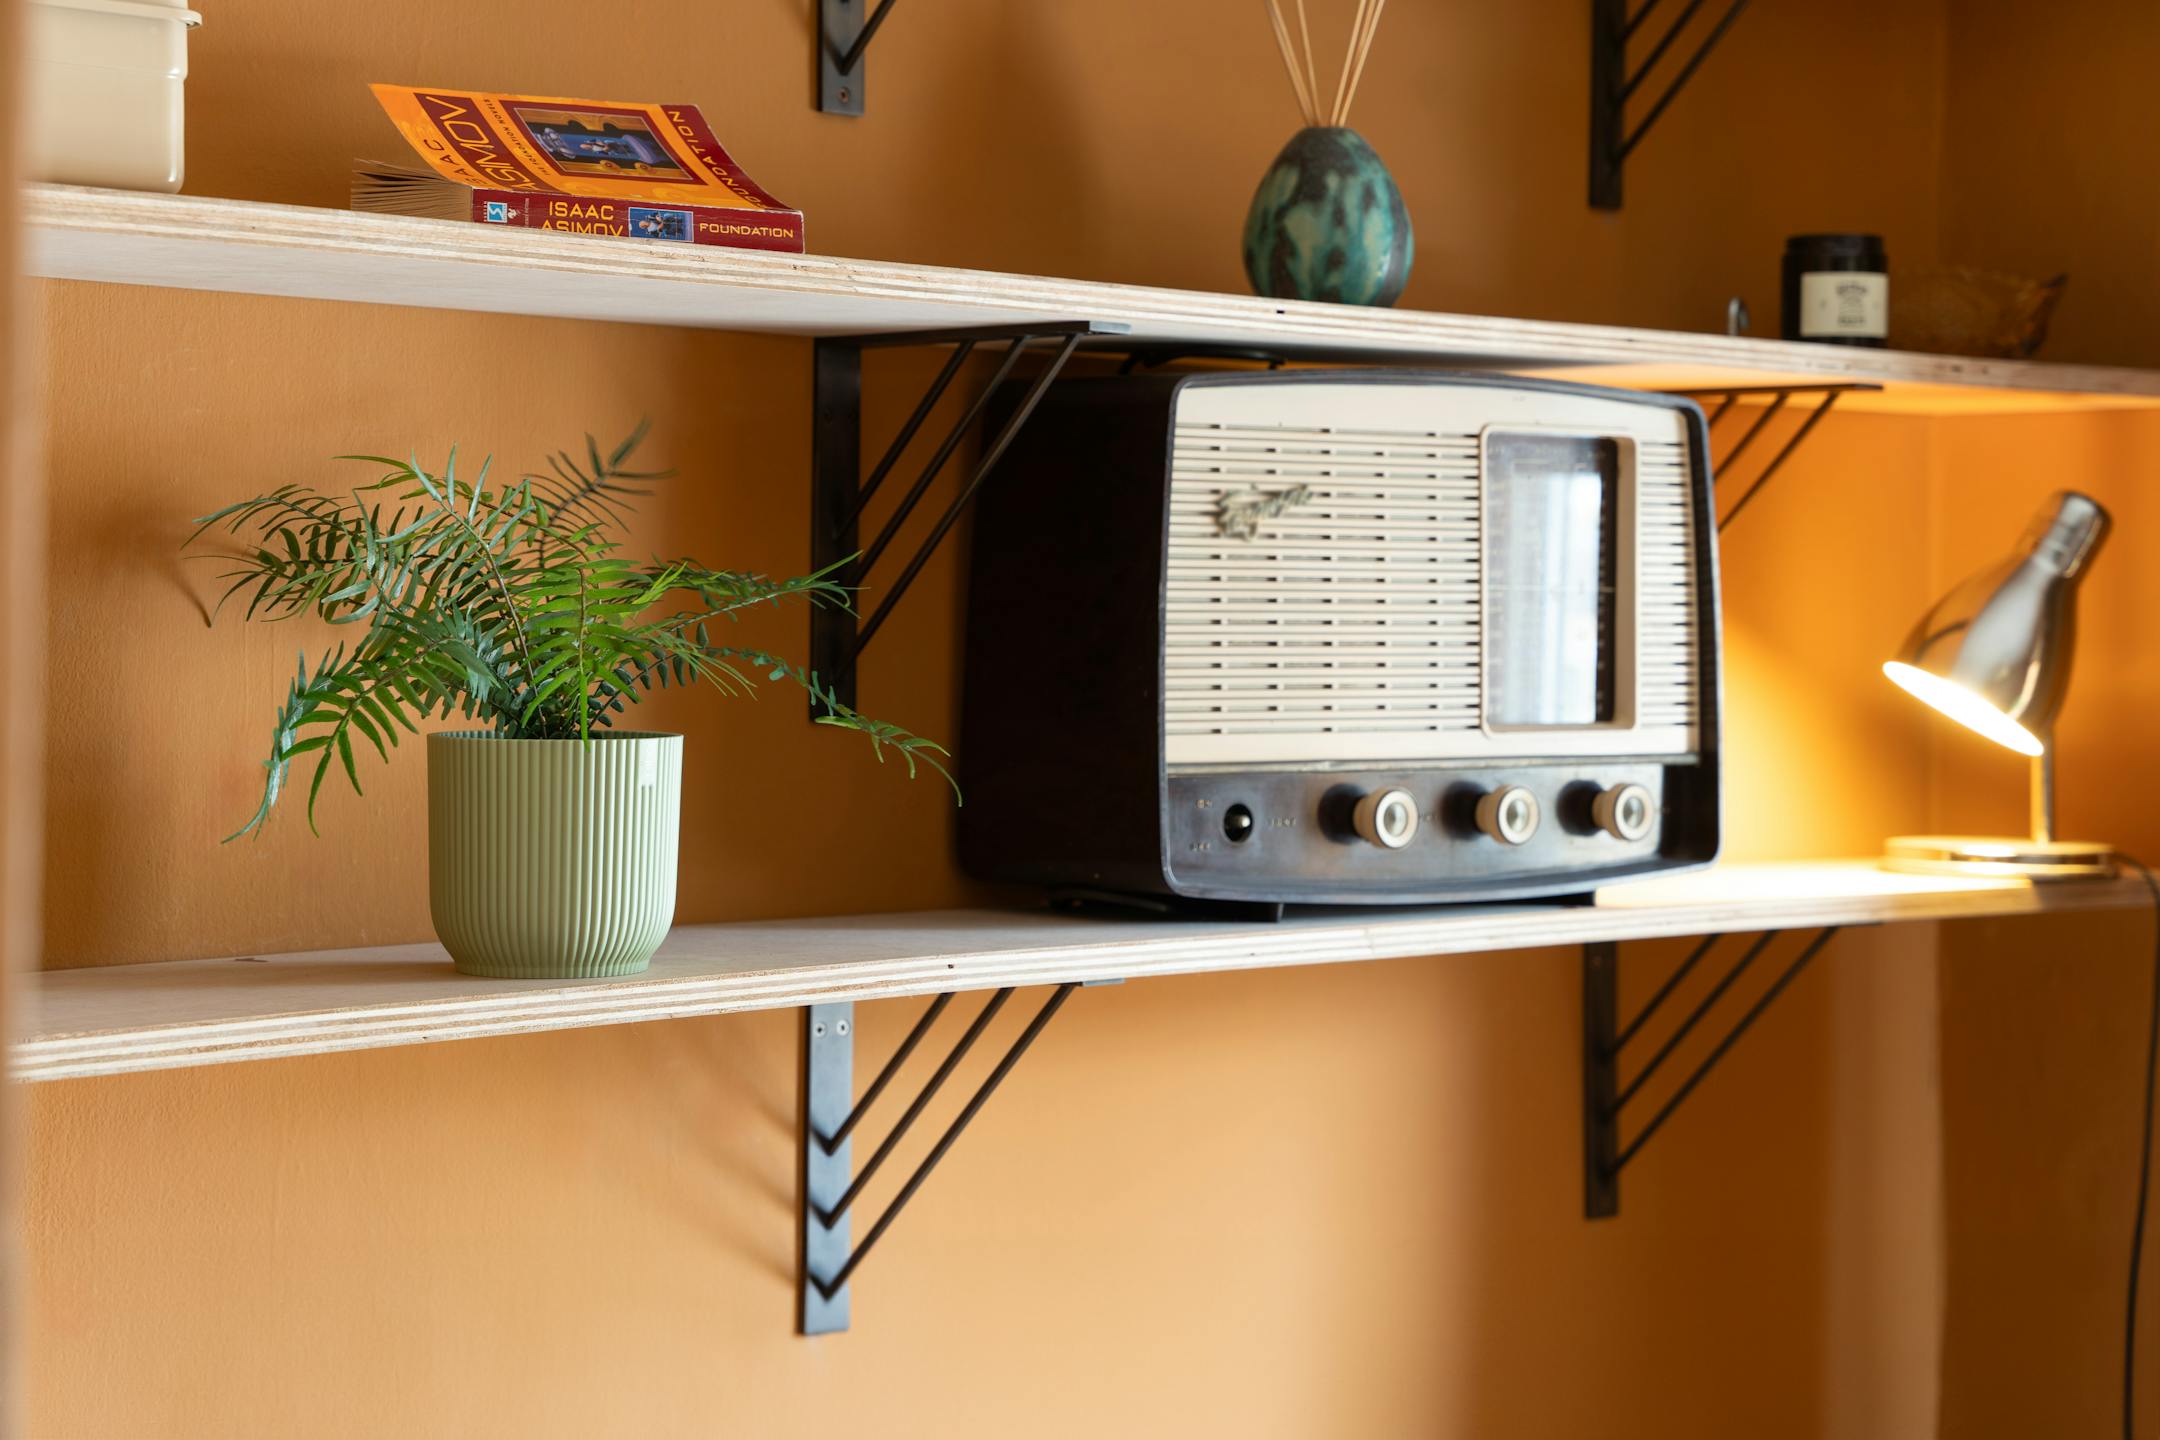 Artificial blechnum fern in orange bedroom on wooden shelf